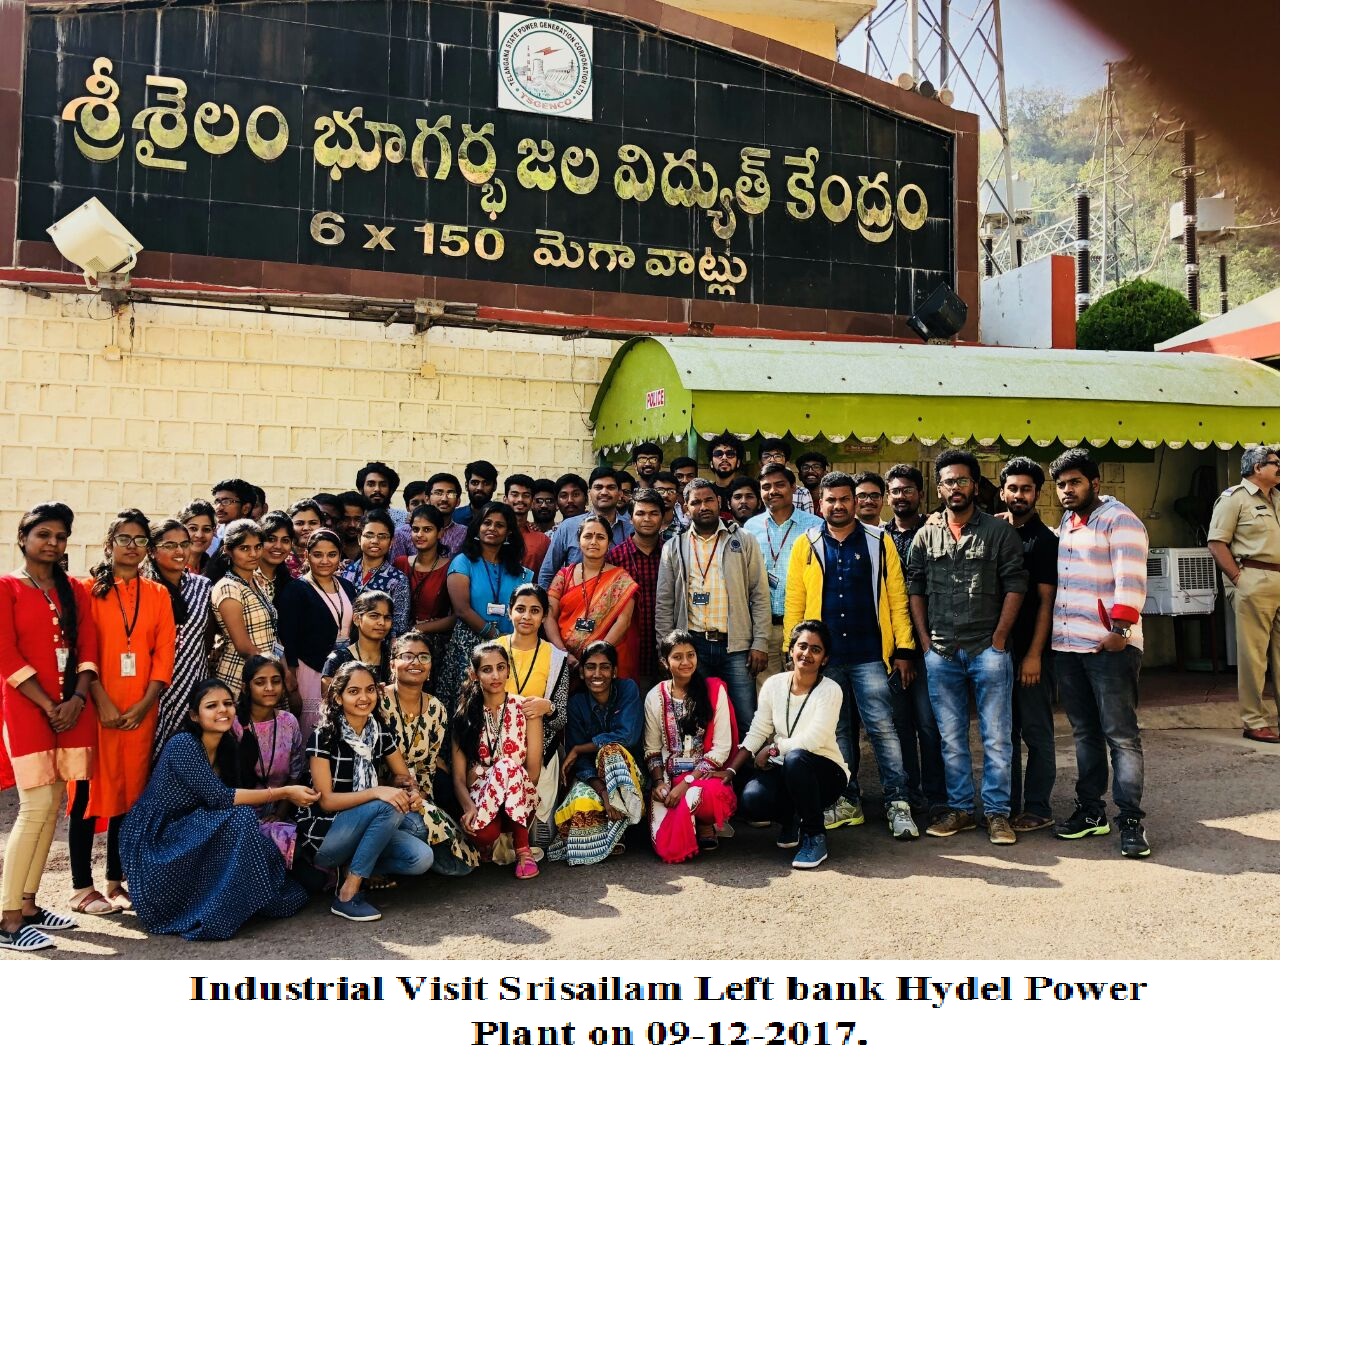 Industrial Visit to Srisailem left bank Hydel Power plant